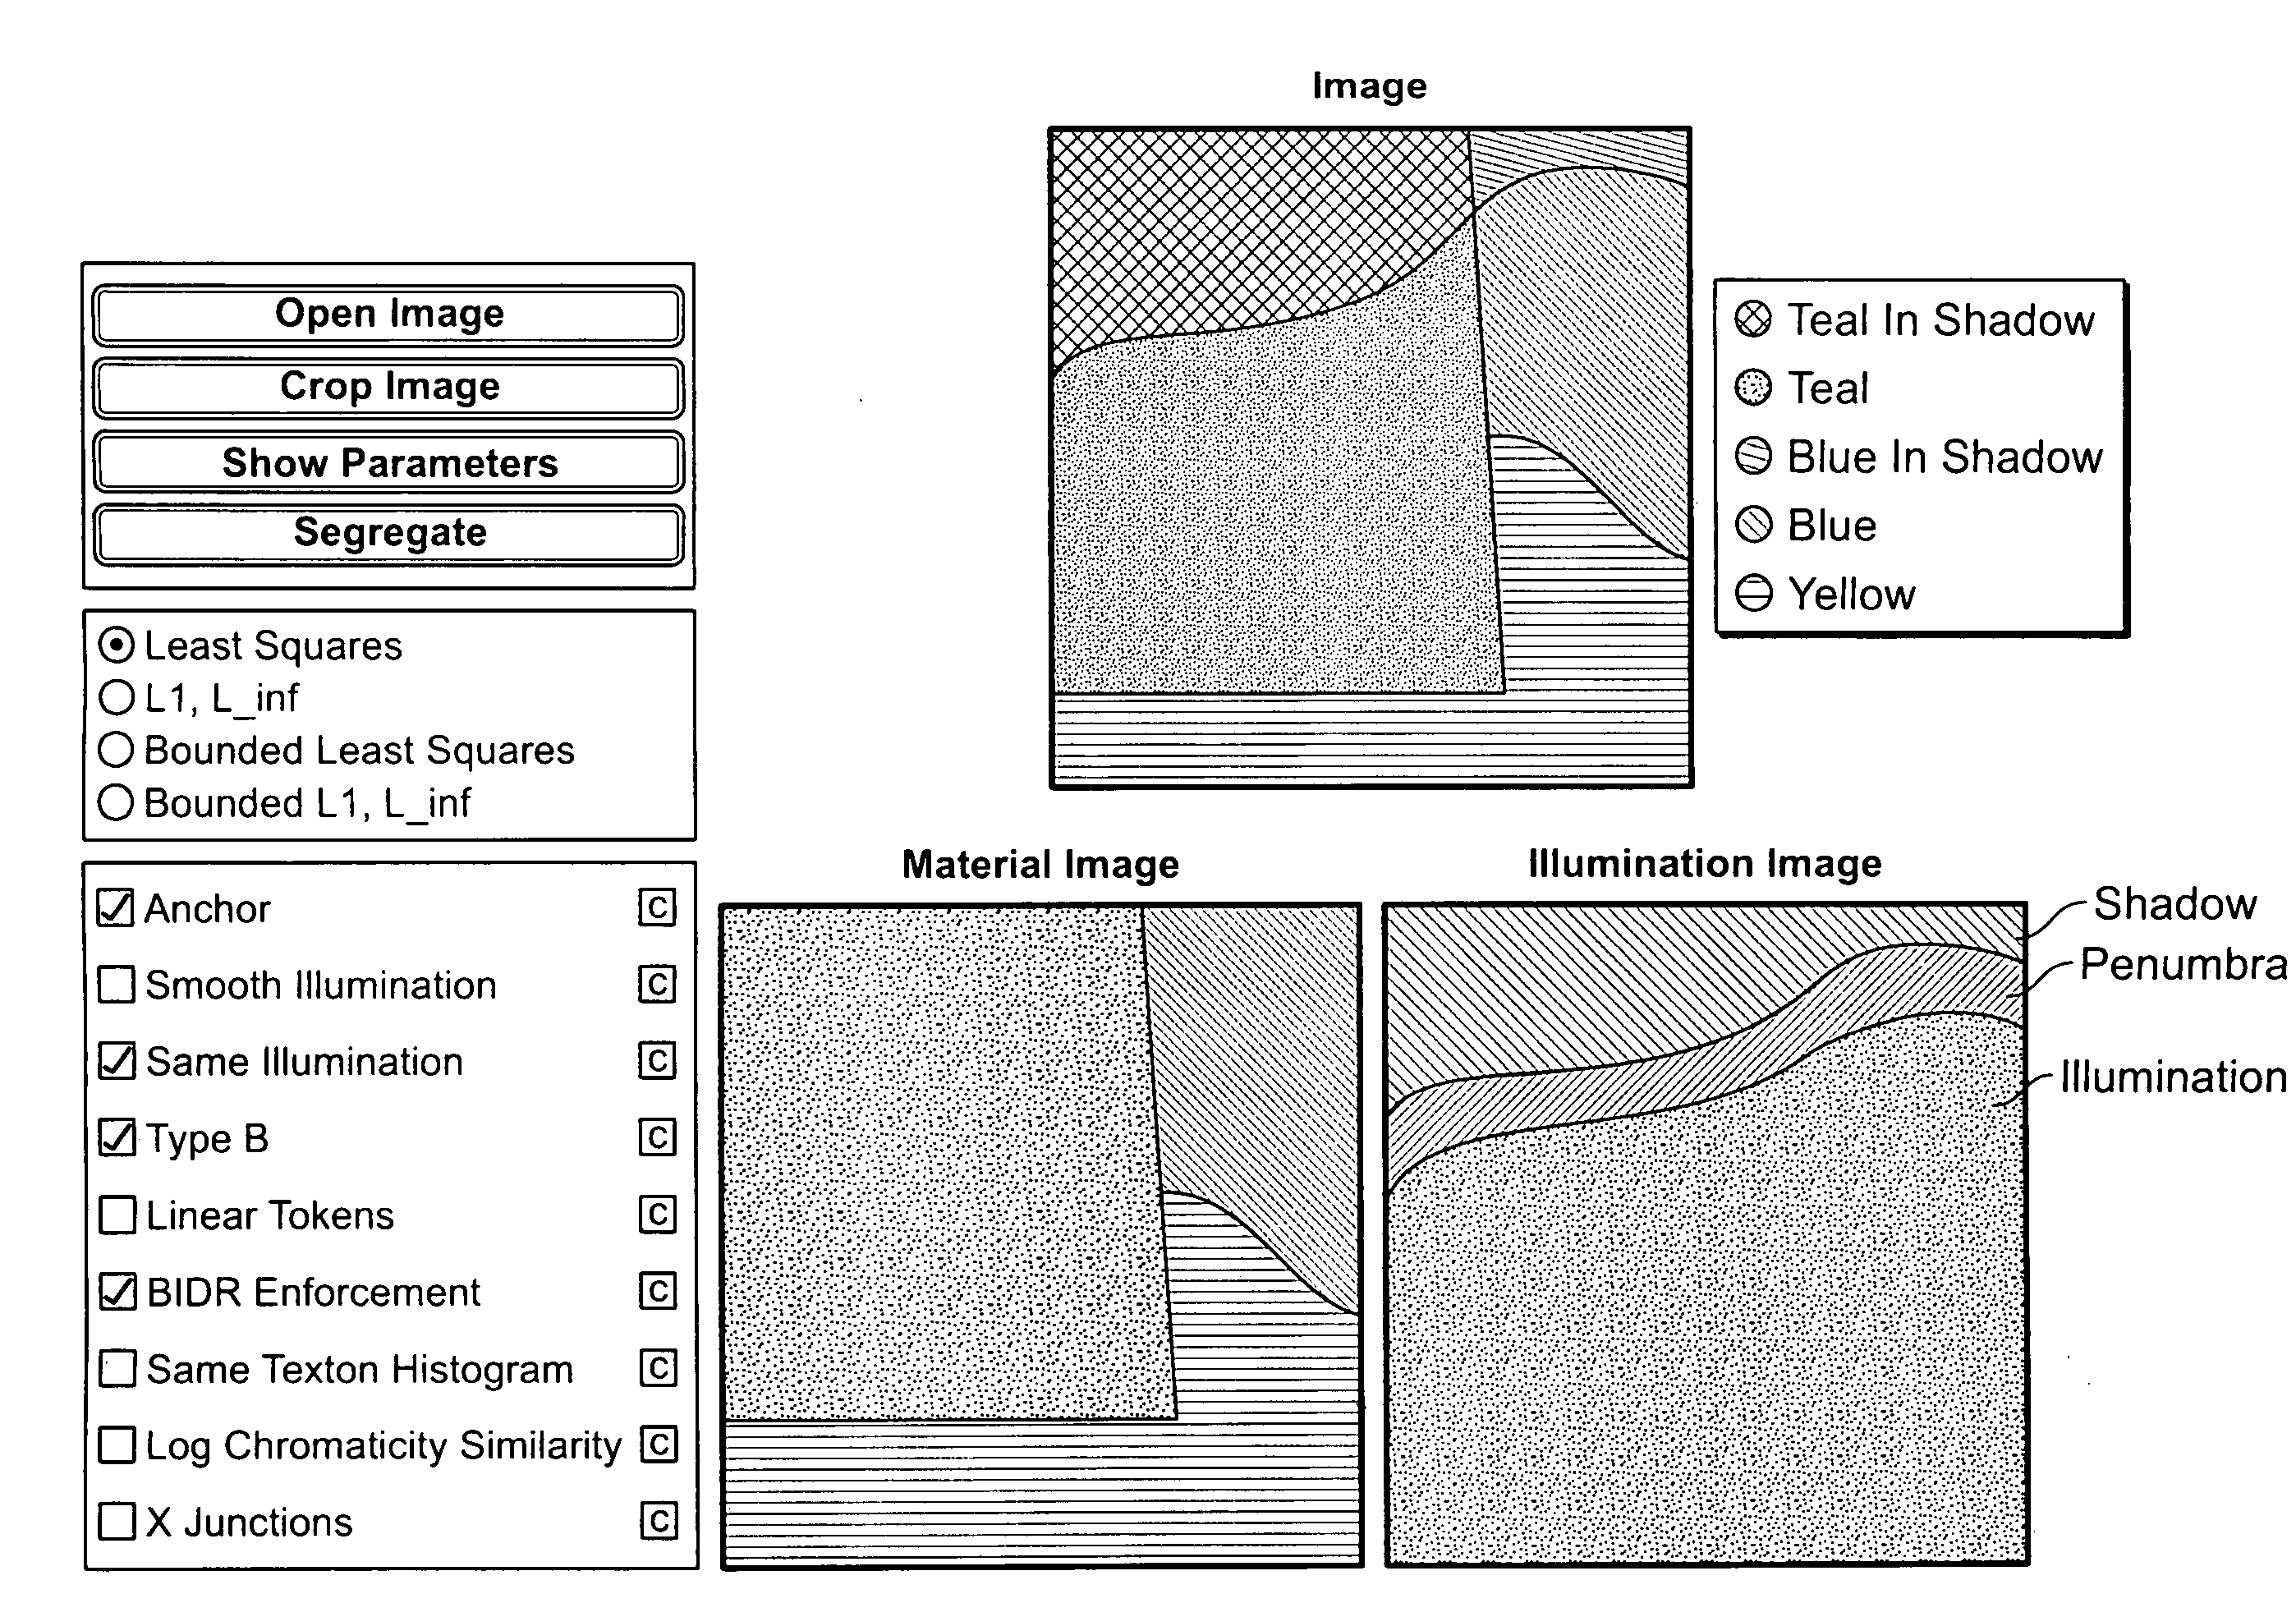 Image segregation system architecture